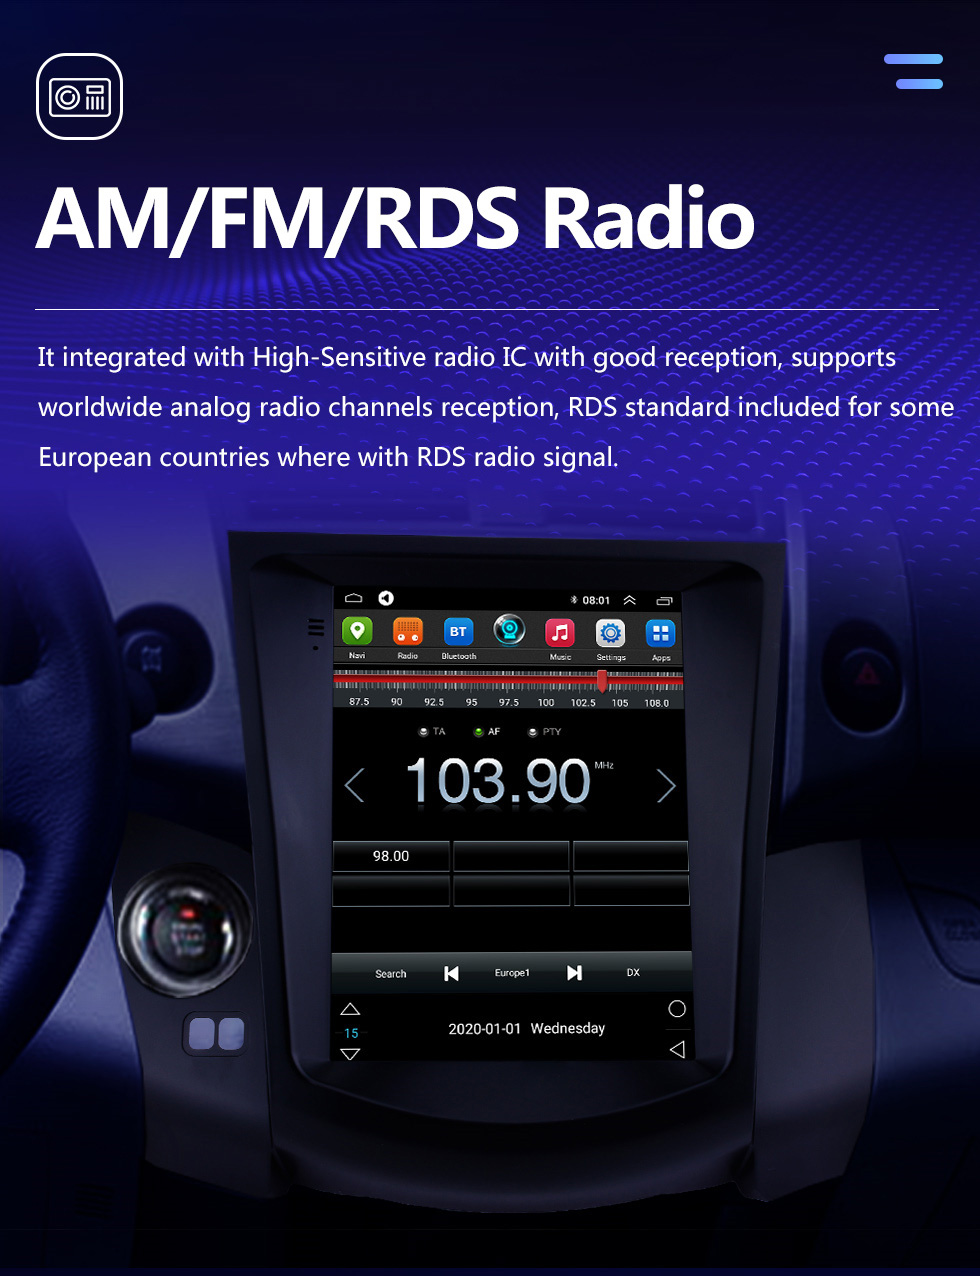 Seicane Android 10.0 Pantalla táctil HD de 9.7 pulgadas para Toyota RAV4 2008 2009 2010 2011 Navegación GPS Radio Bluetooth AUX WIFI compatible 4G Carplay OBD2 SWC DVR TV digital Cámara de respaldo